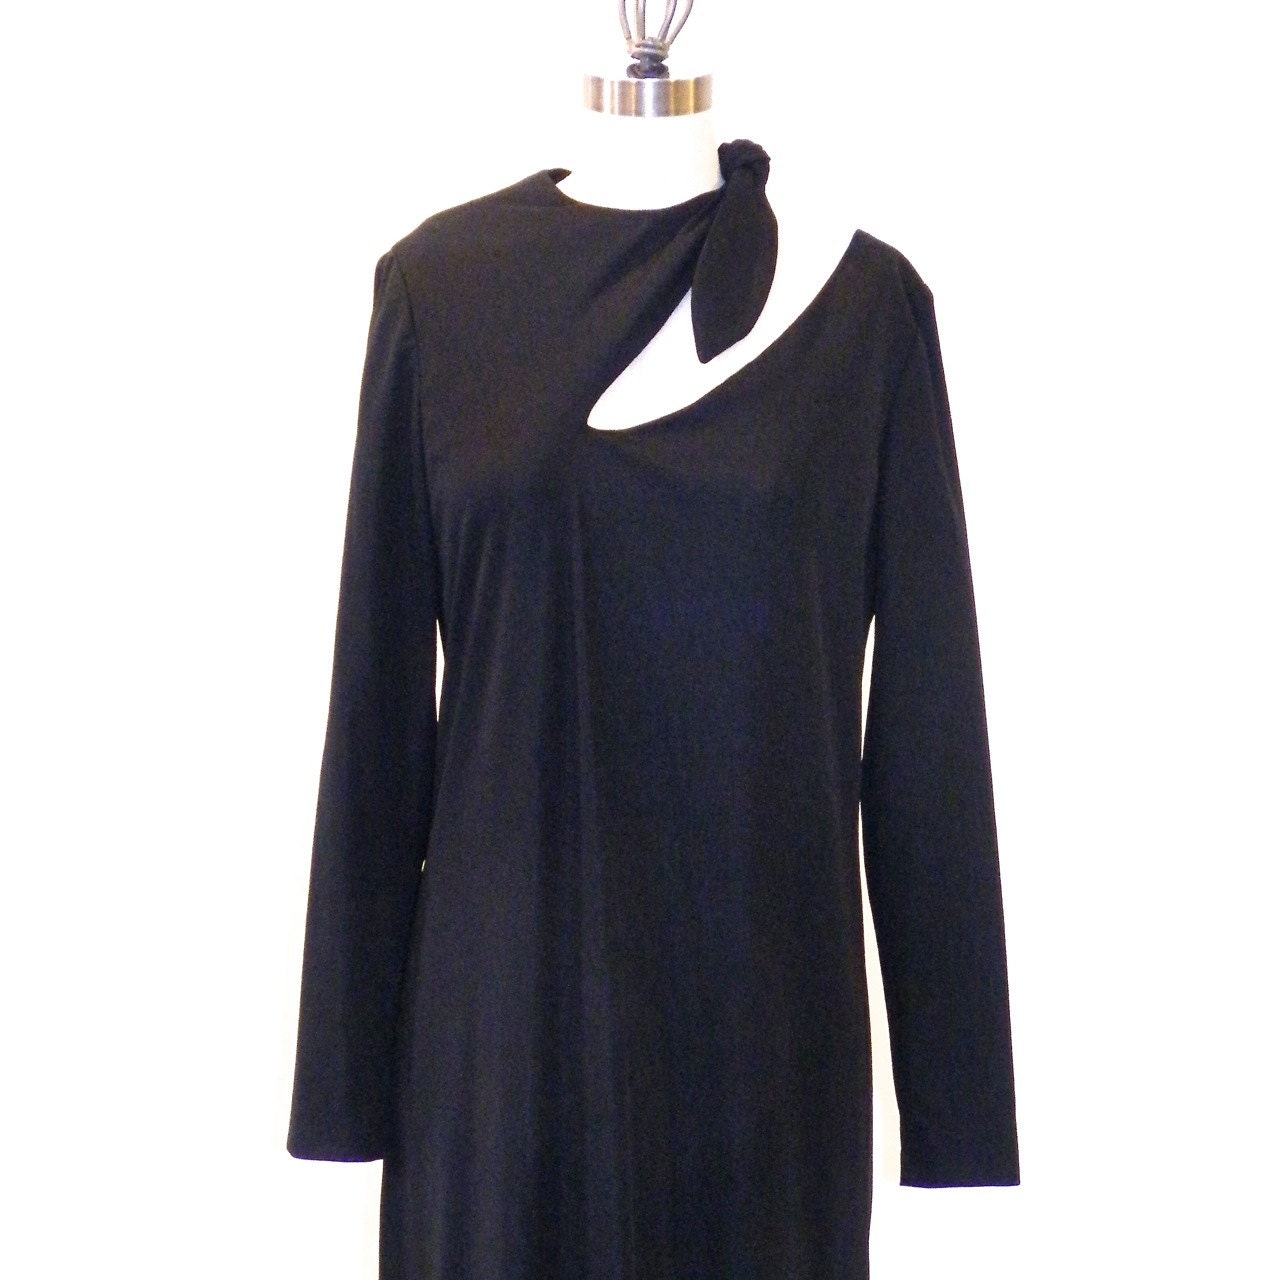 Vintage 1970s Black Cutout Dress 70s by DaisysVtgClothesLine